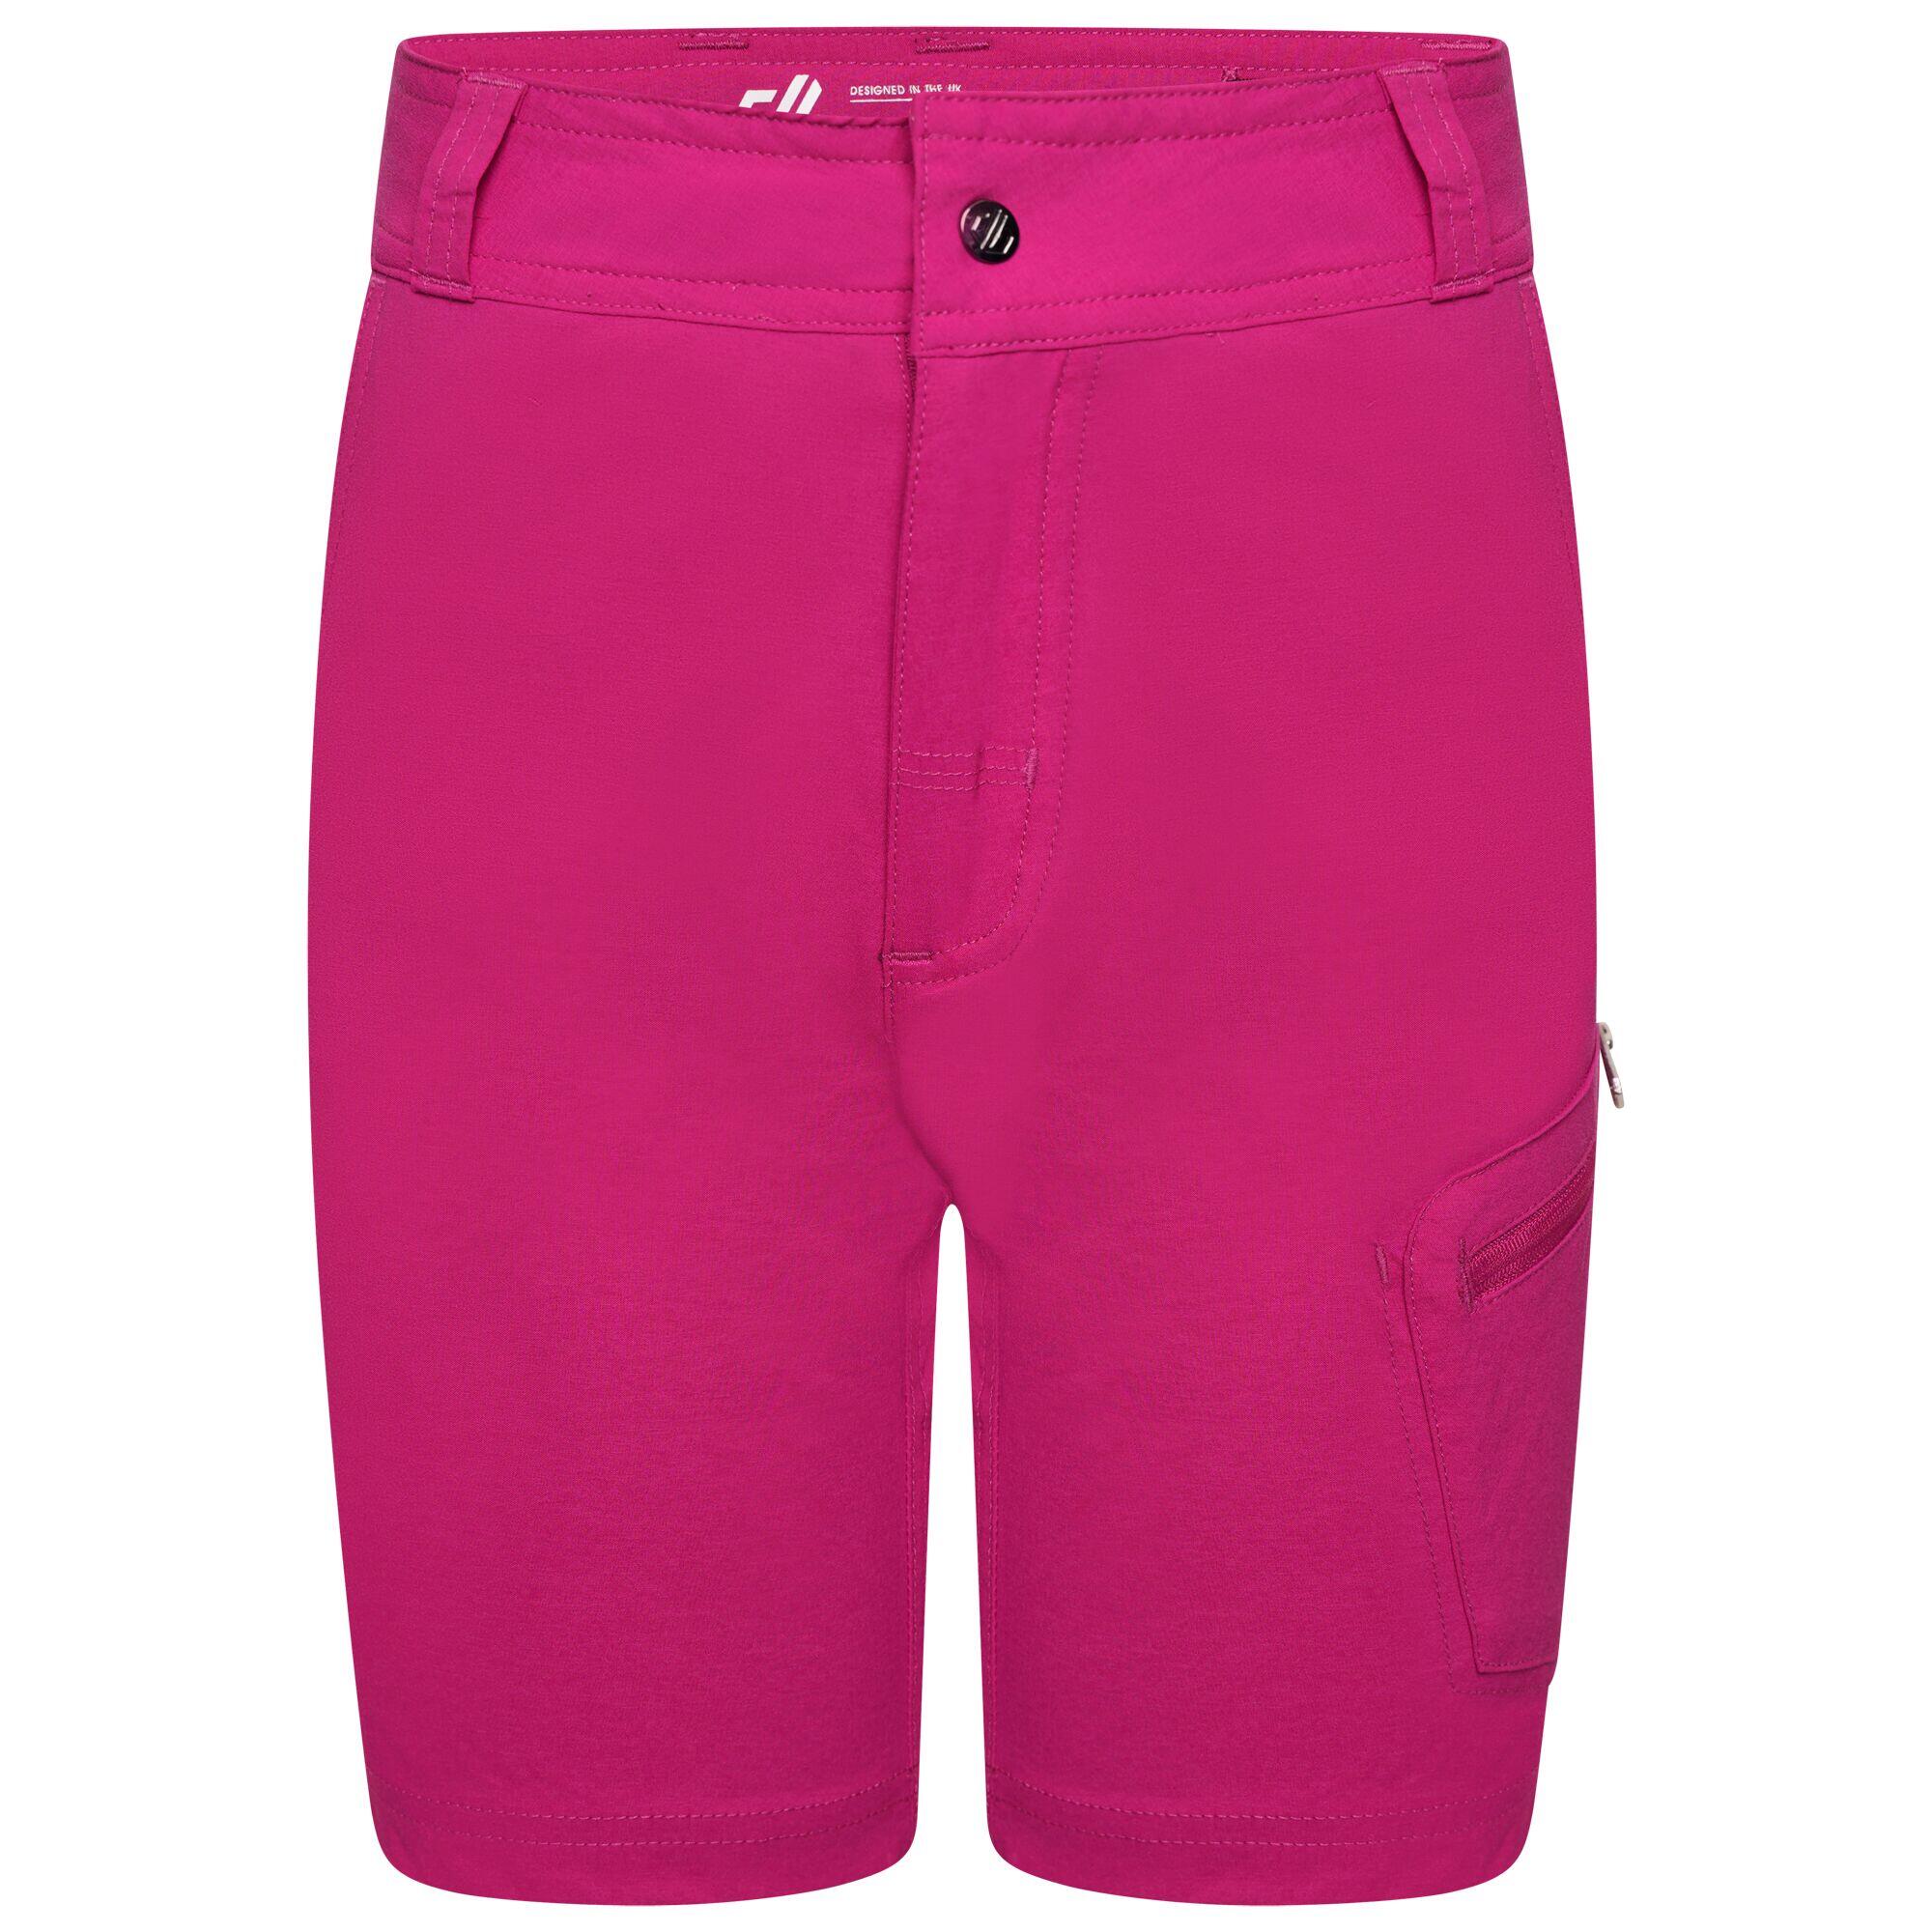 Reprise II Kids Hiking Shorts - Fuchsia Pink 5/5